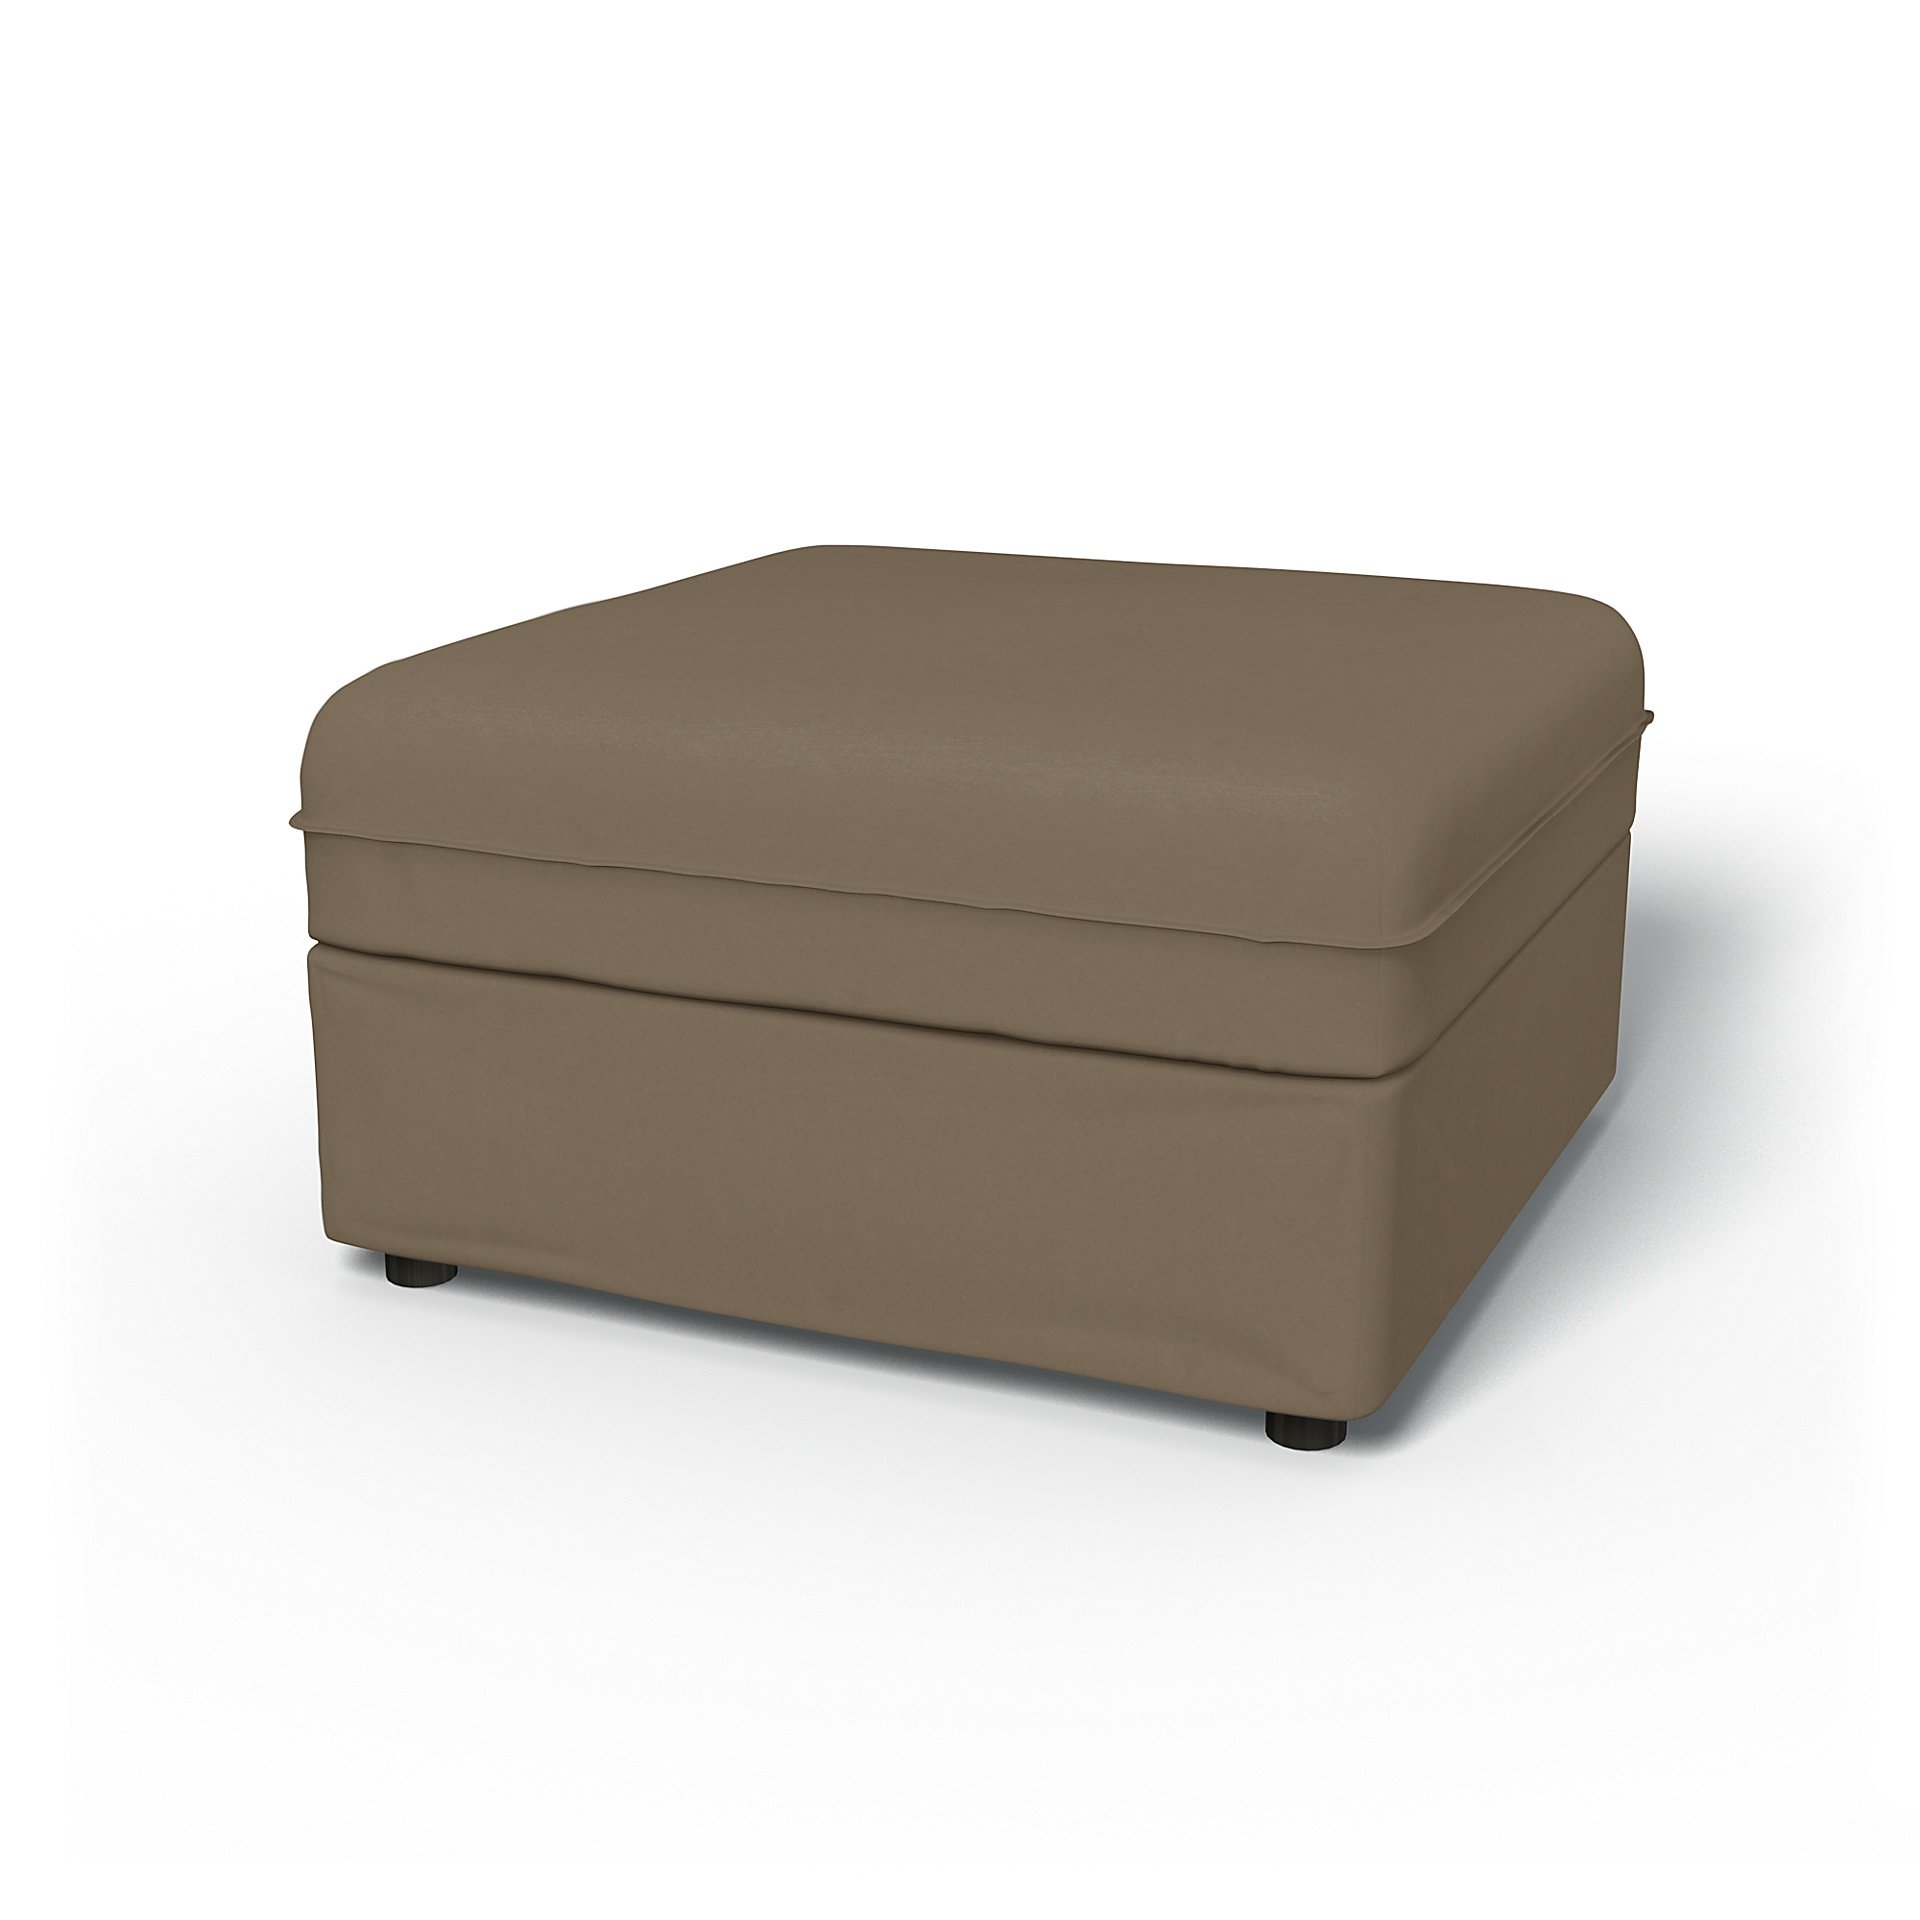 IKEA - Vallentuna Seat Module with Storage Cover 80x80cm 32x32in, Taupe, Velvet - Bemz